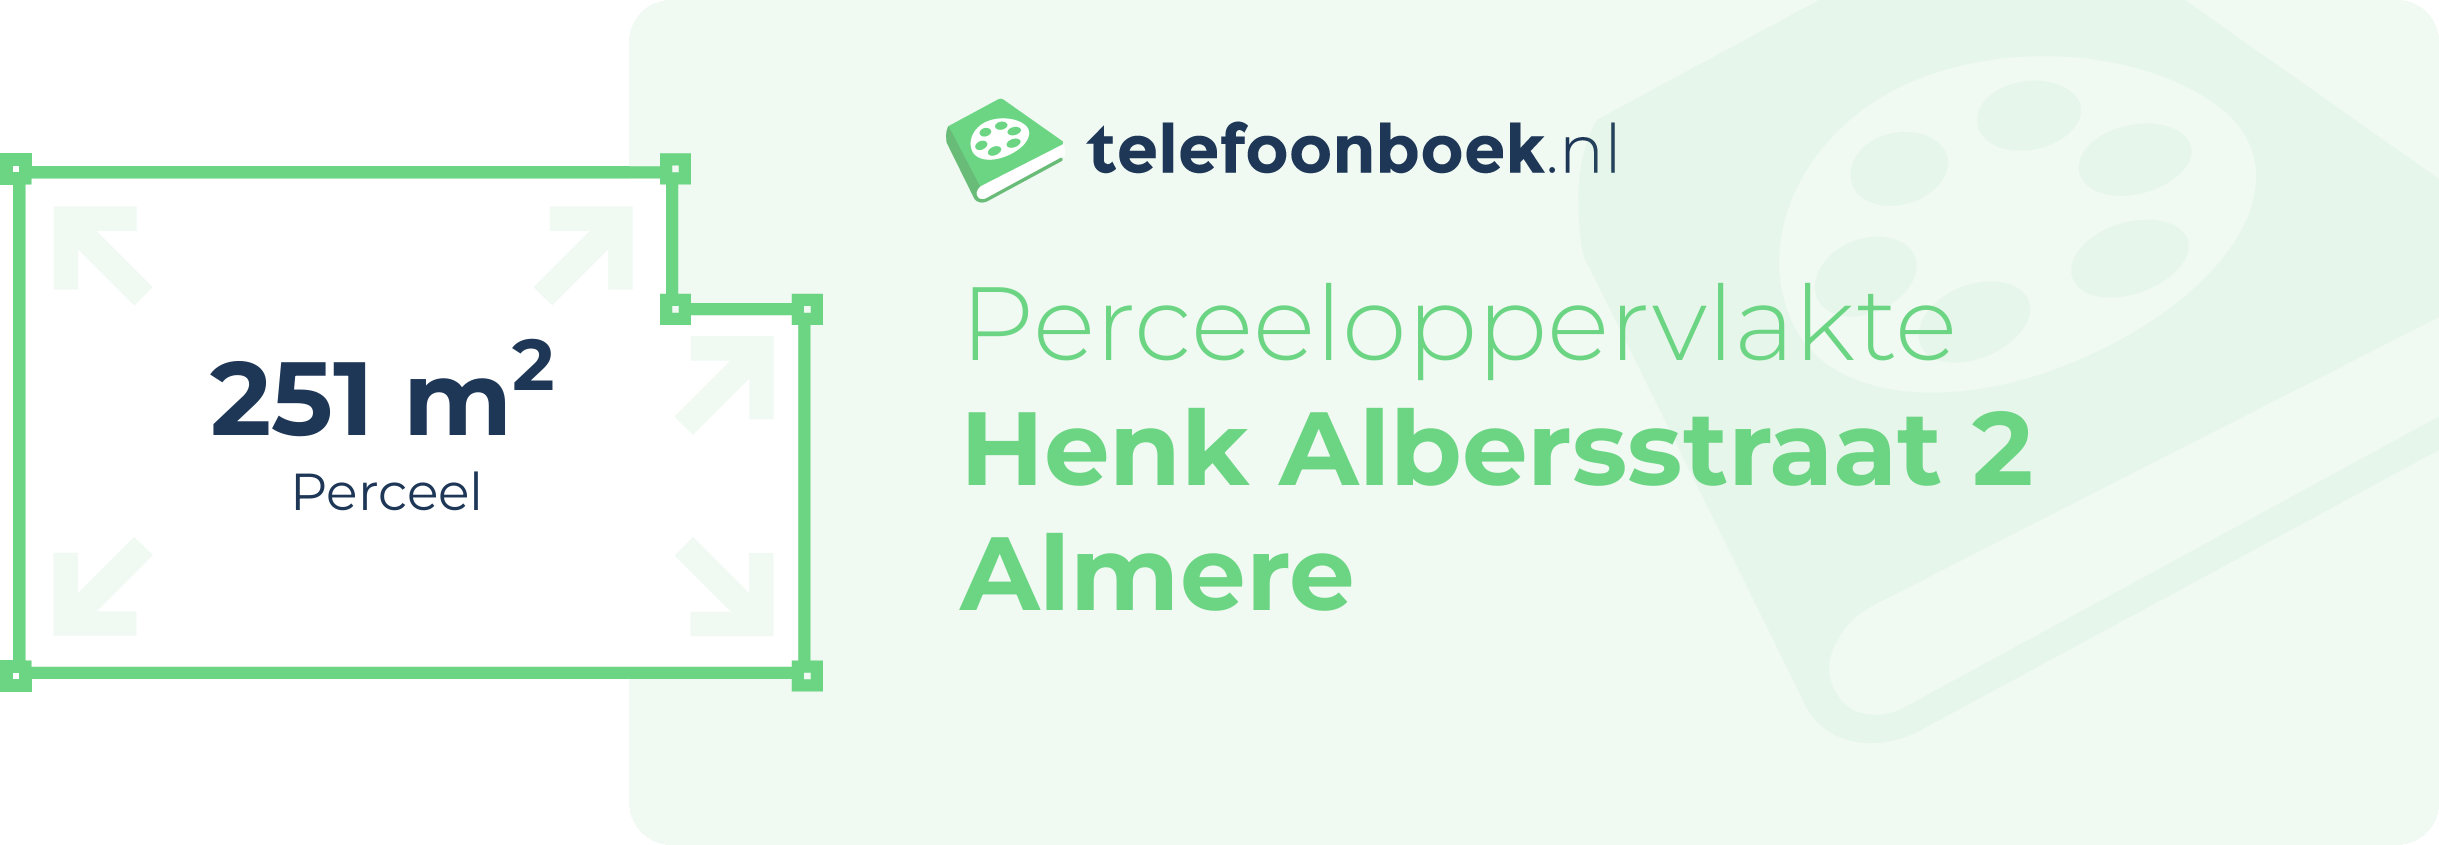 Perceeloppervlakte Henk Albersstraat 2 Almere